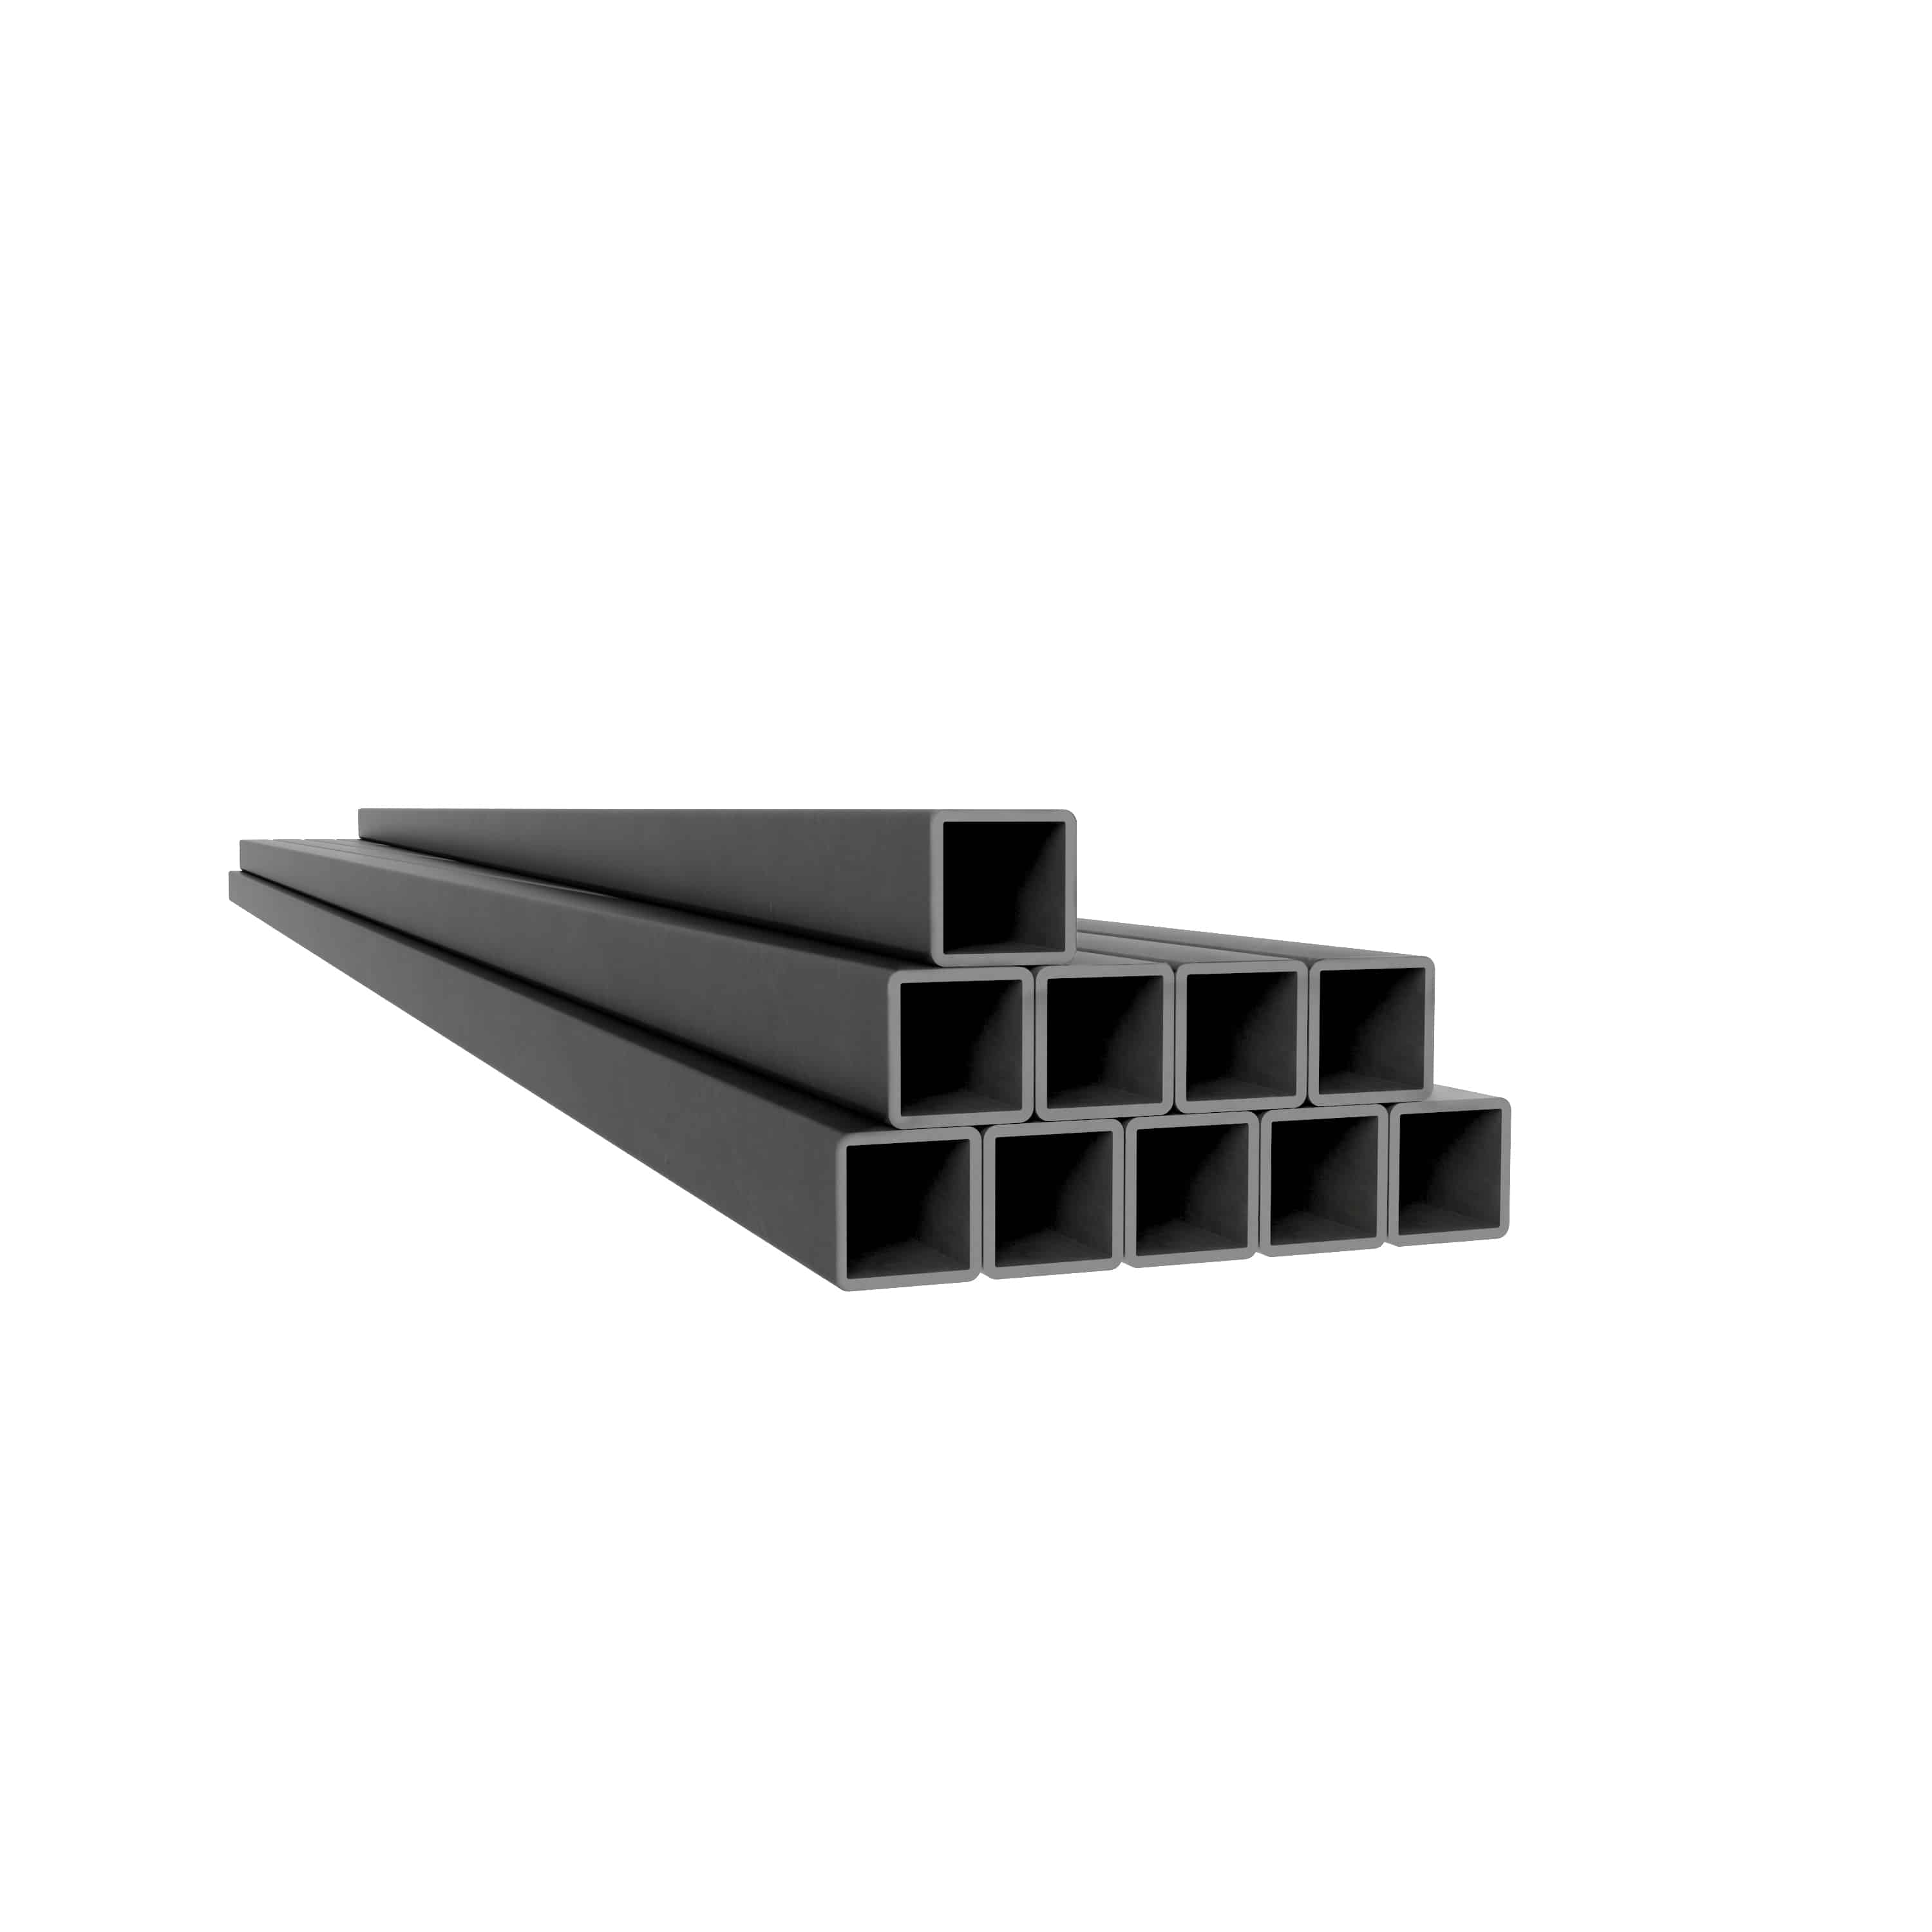 Square Pipe - Square pipe 150 x 150 x 5 mm S235-6LM, https:maxbau.ro